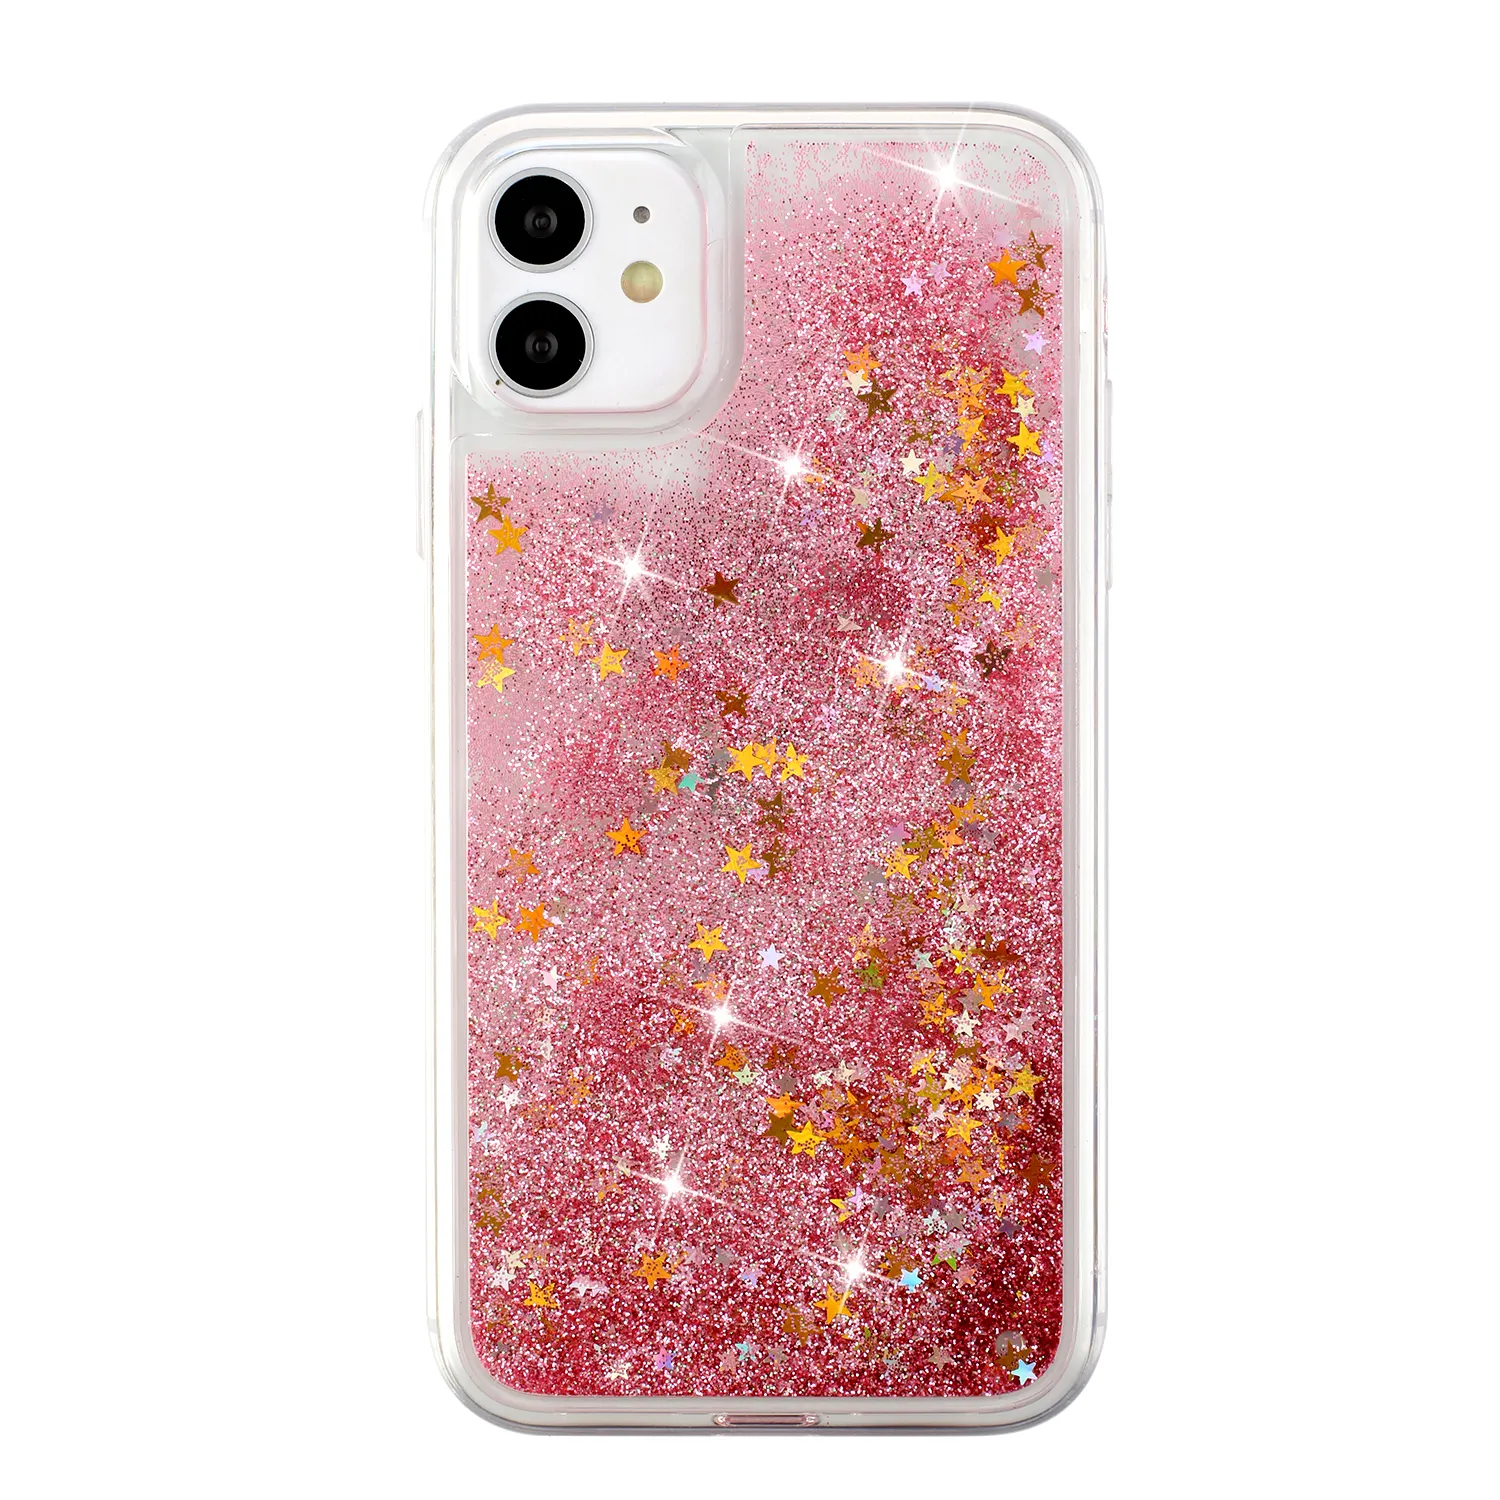 Black Liquid Grain Glitter Quicksand pc Tpu Phone Cover Case For Iphone 11 12